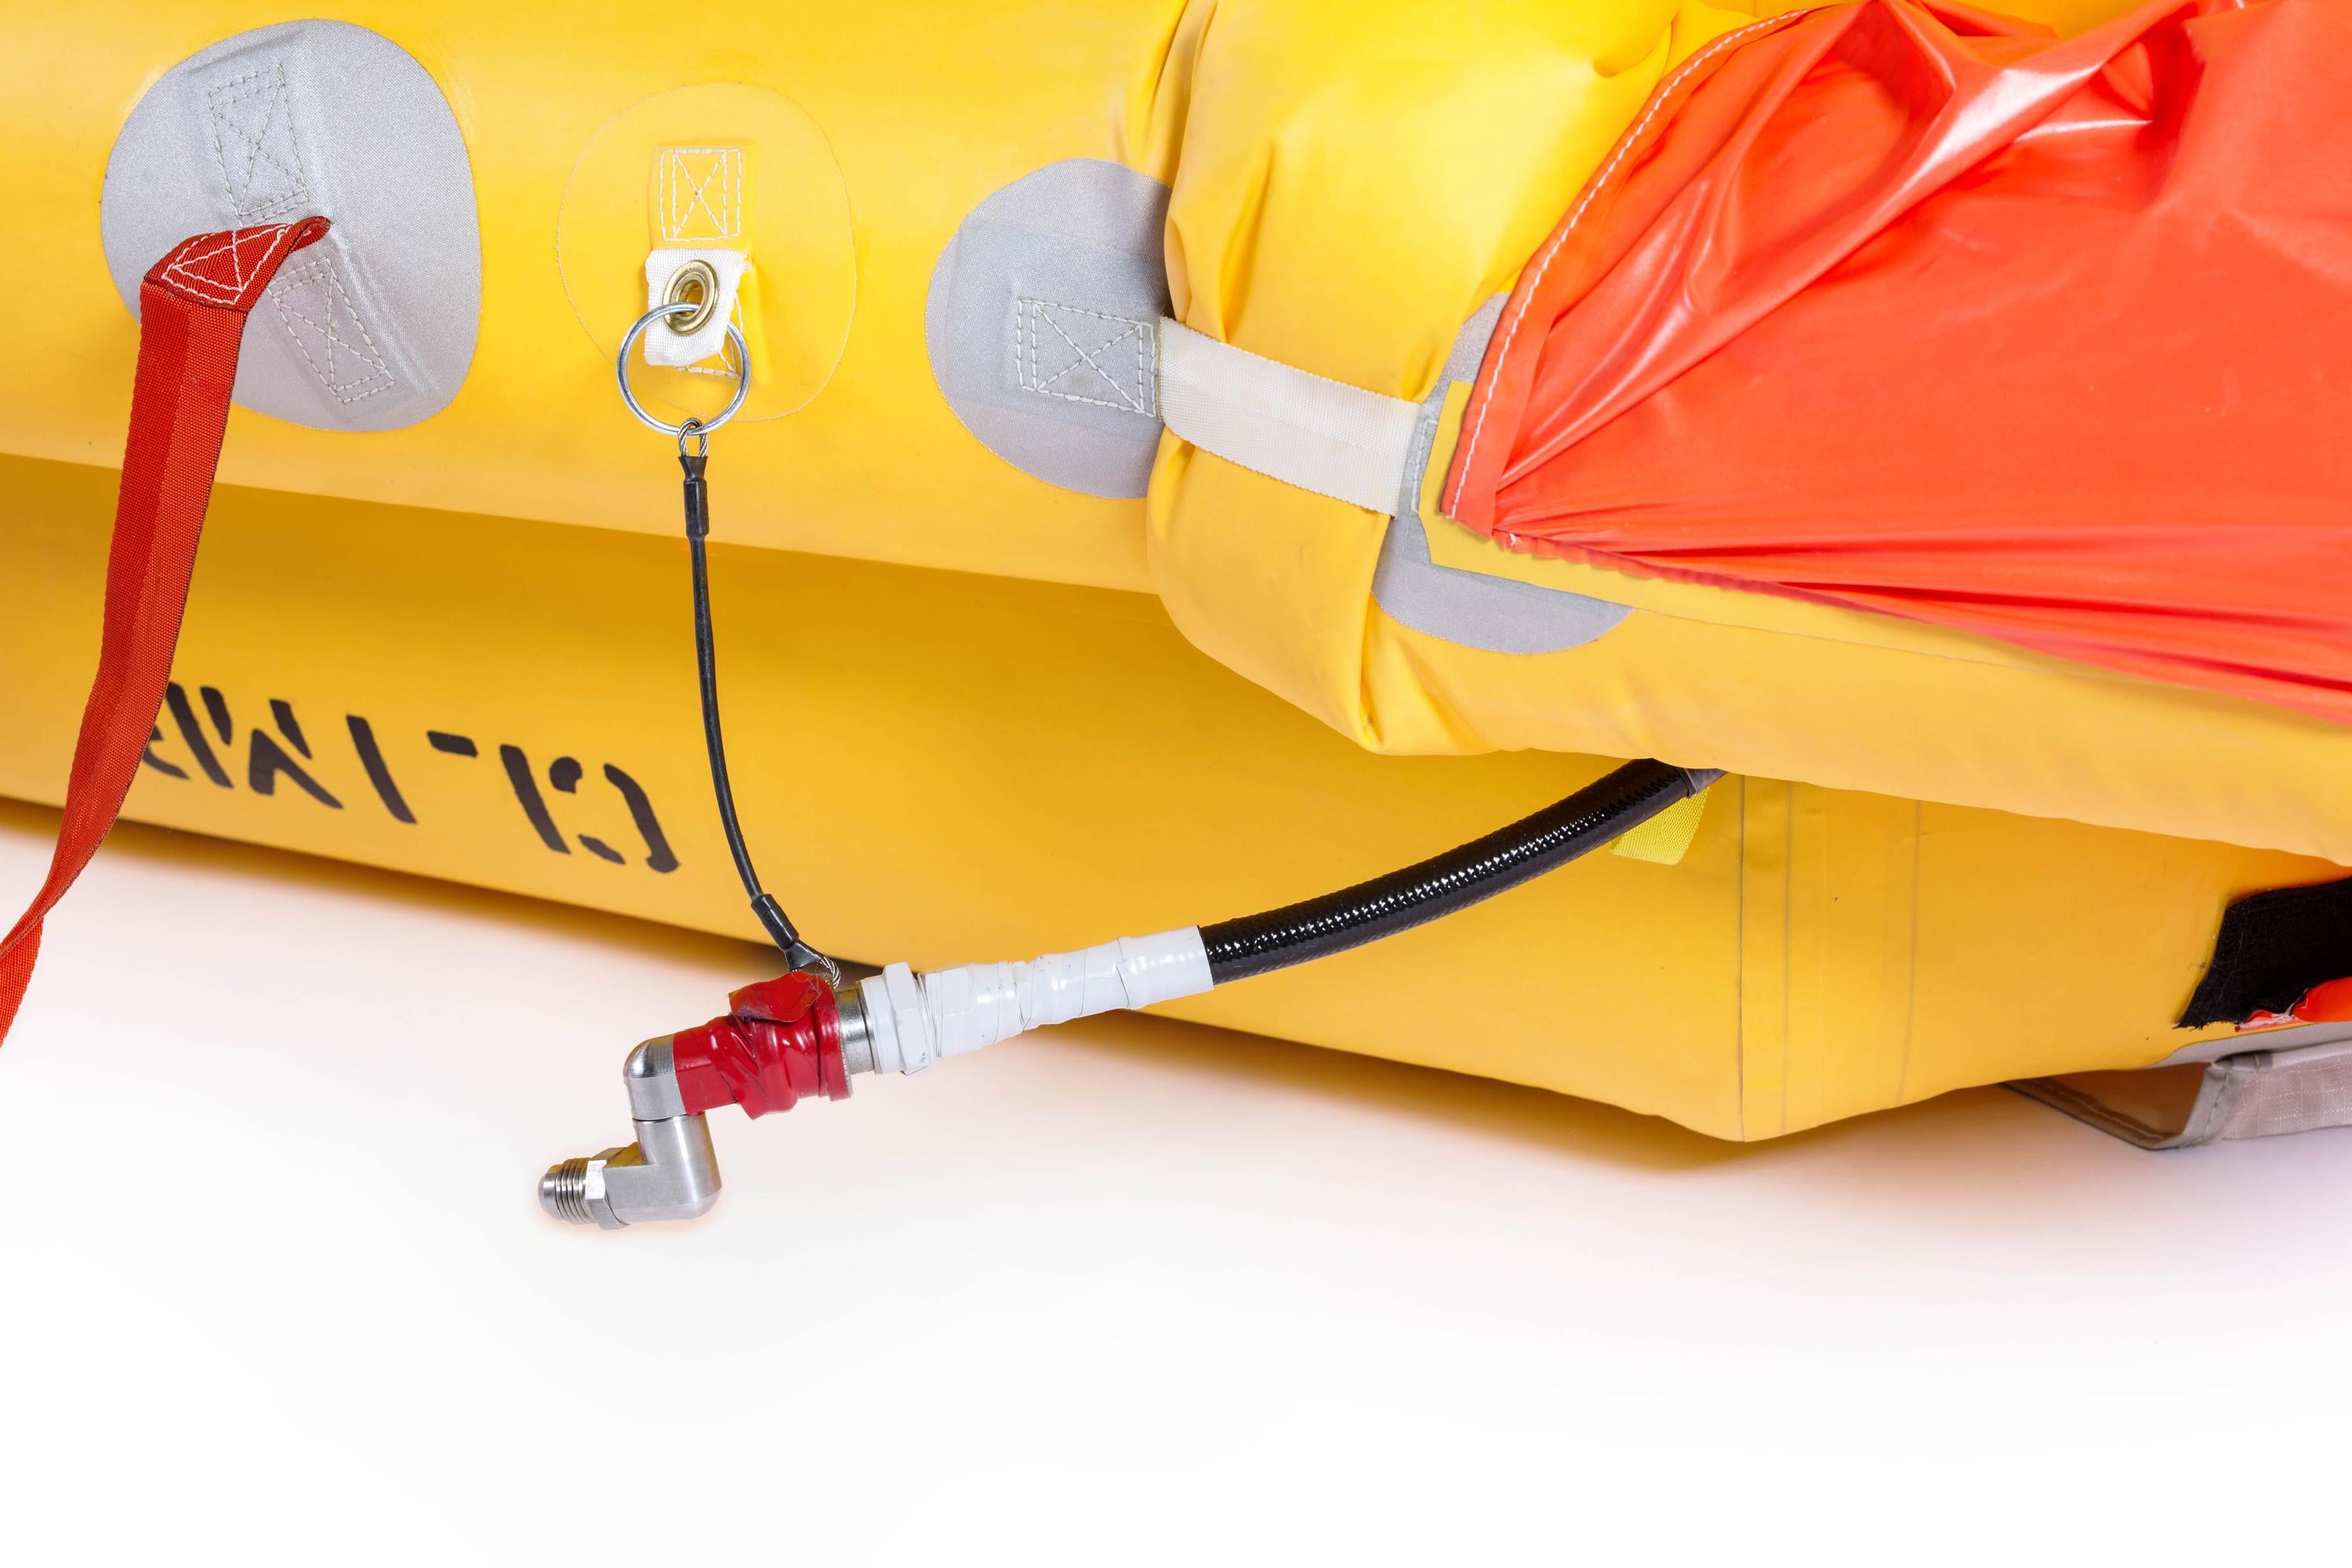 412/212/210 tri bag float system with liferafts, external hoist compatible 